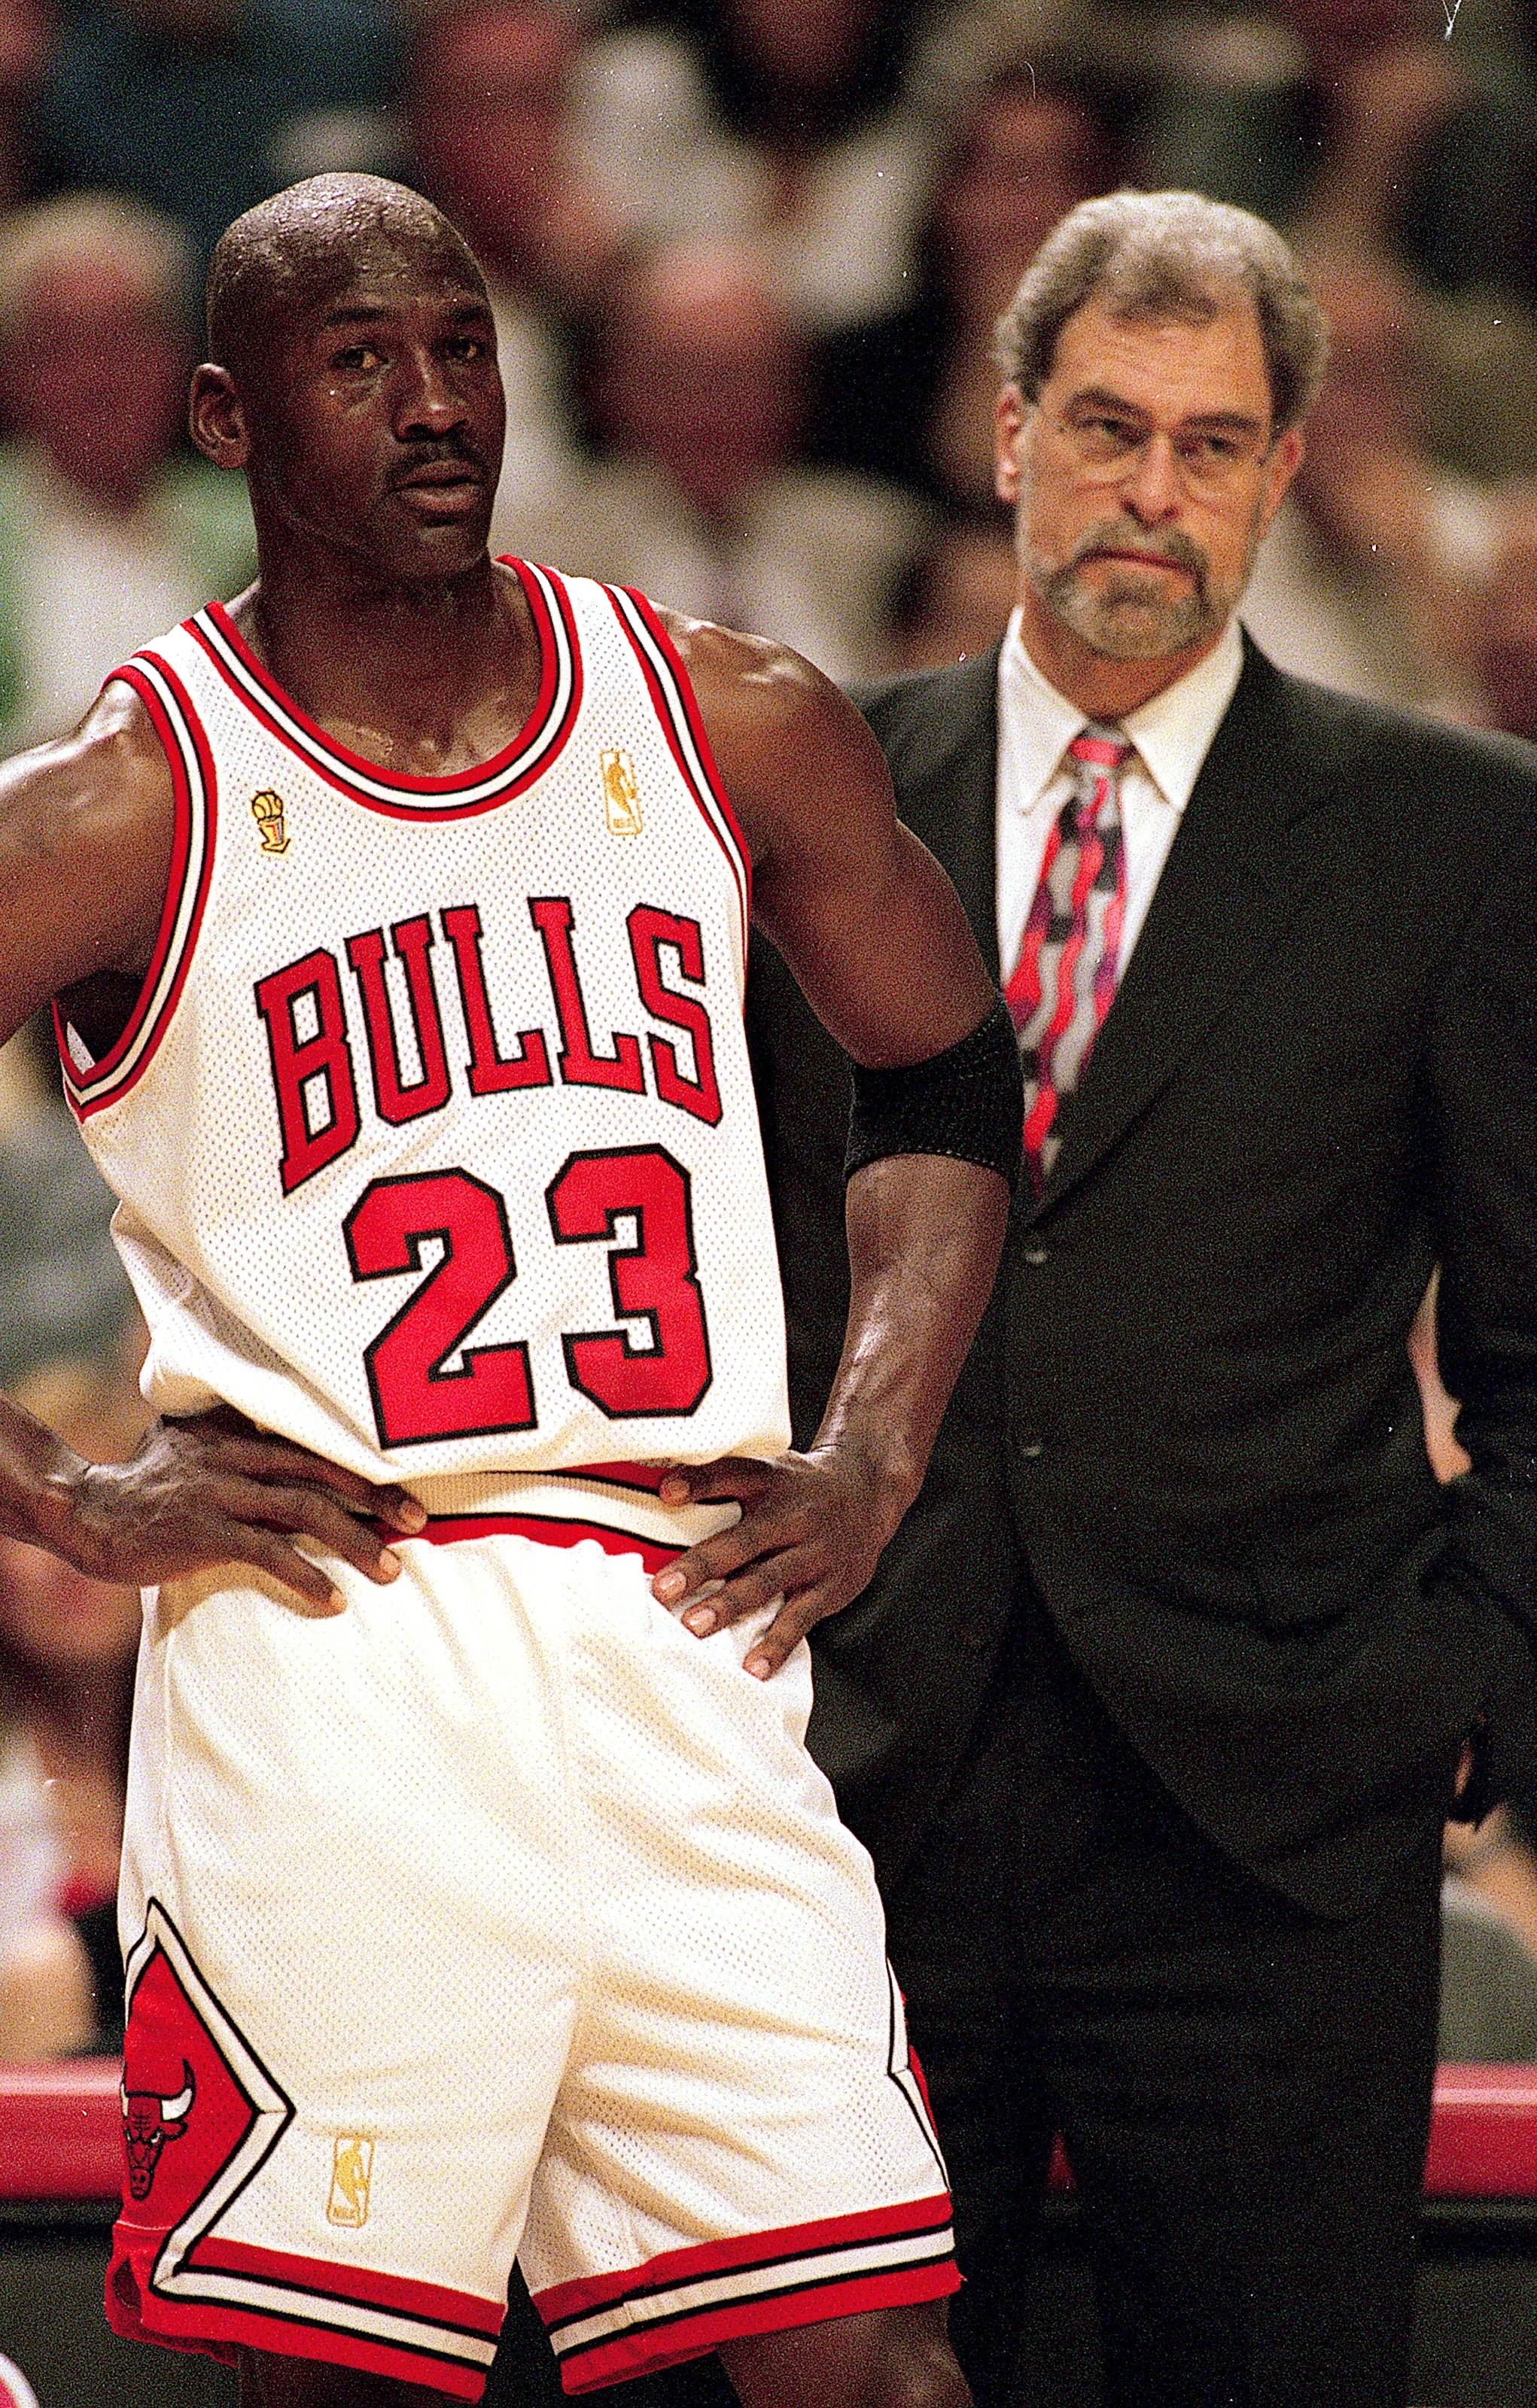 Michael Jordan and Phil Jackson